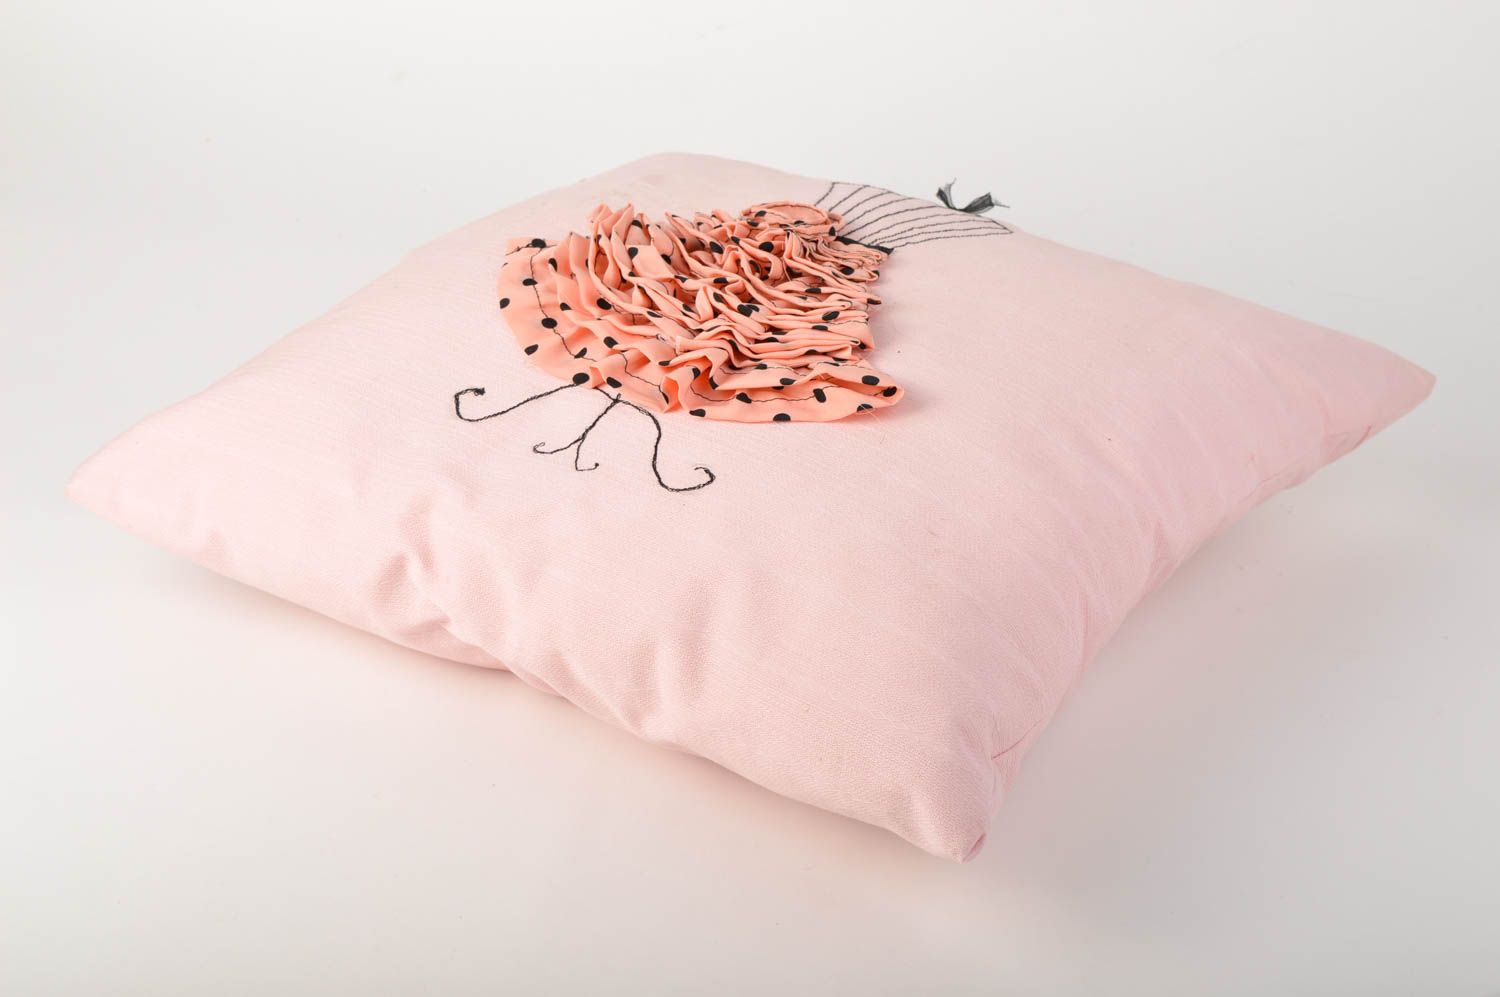 Stylish handmade throw pillow interior decorating gift ideas decorative use only photo 2